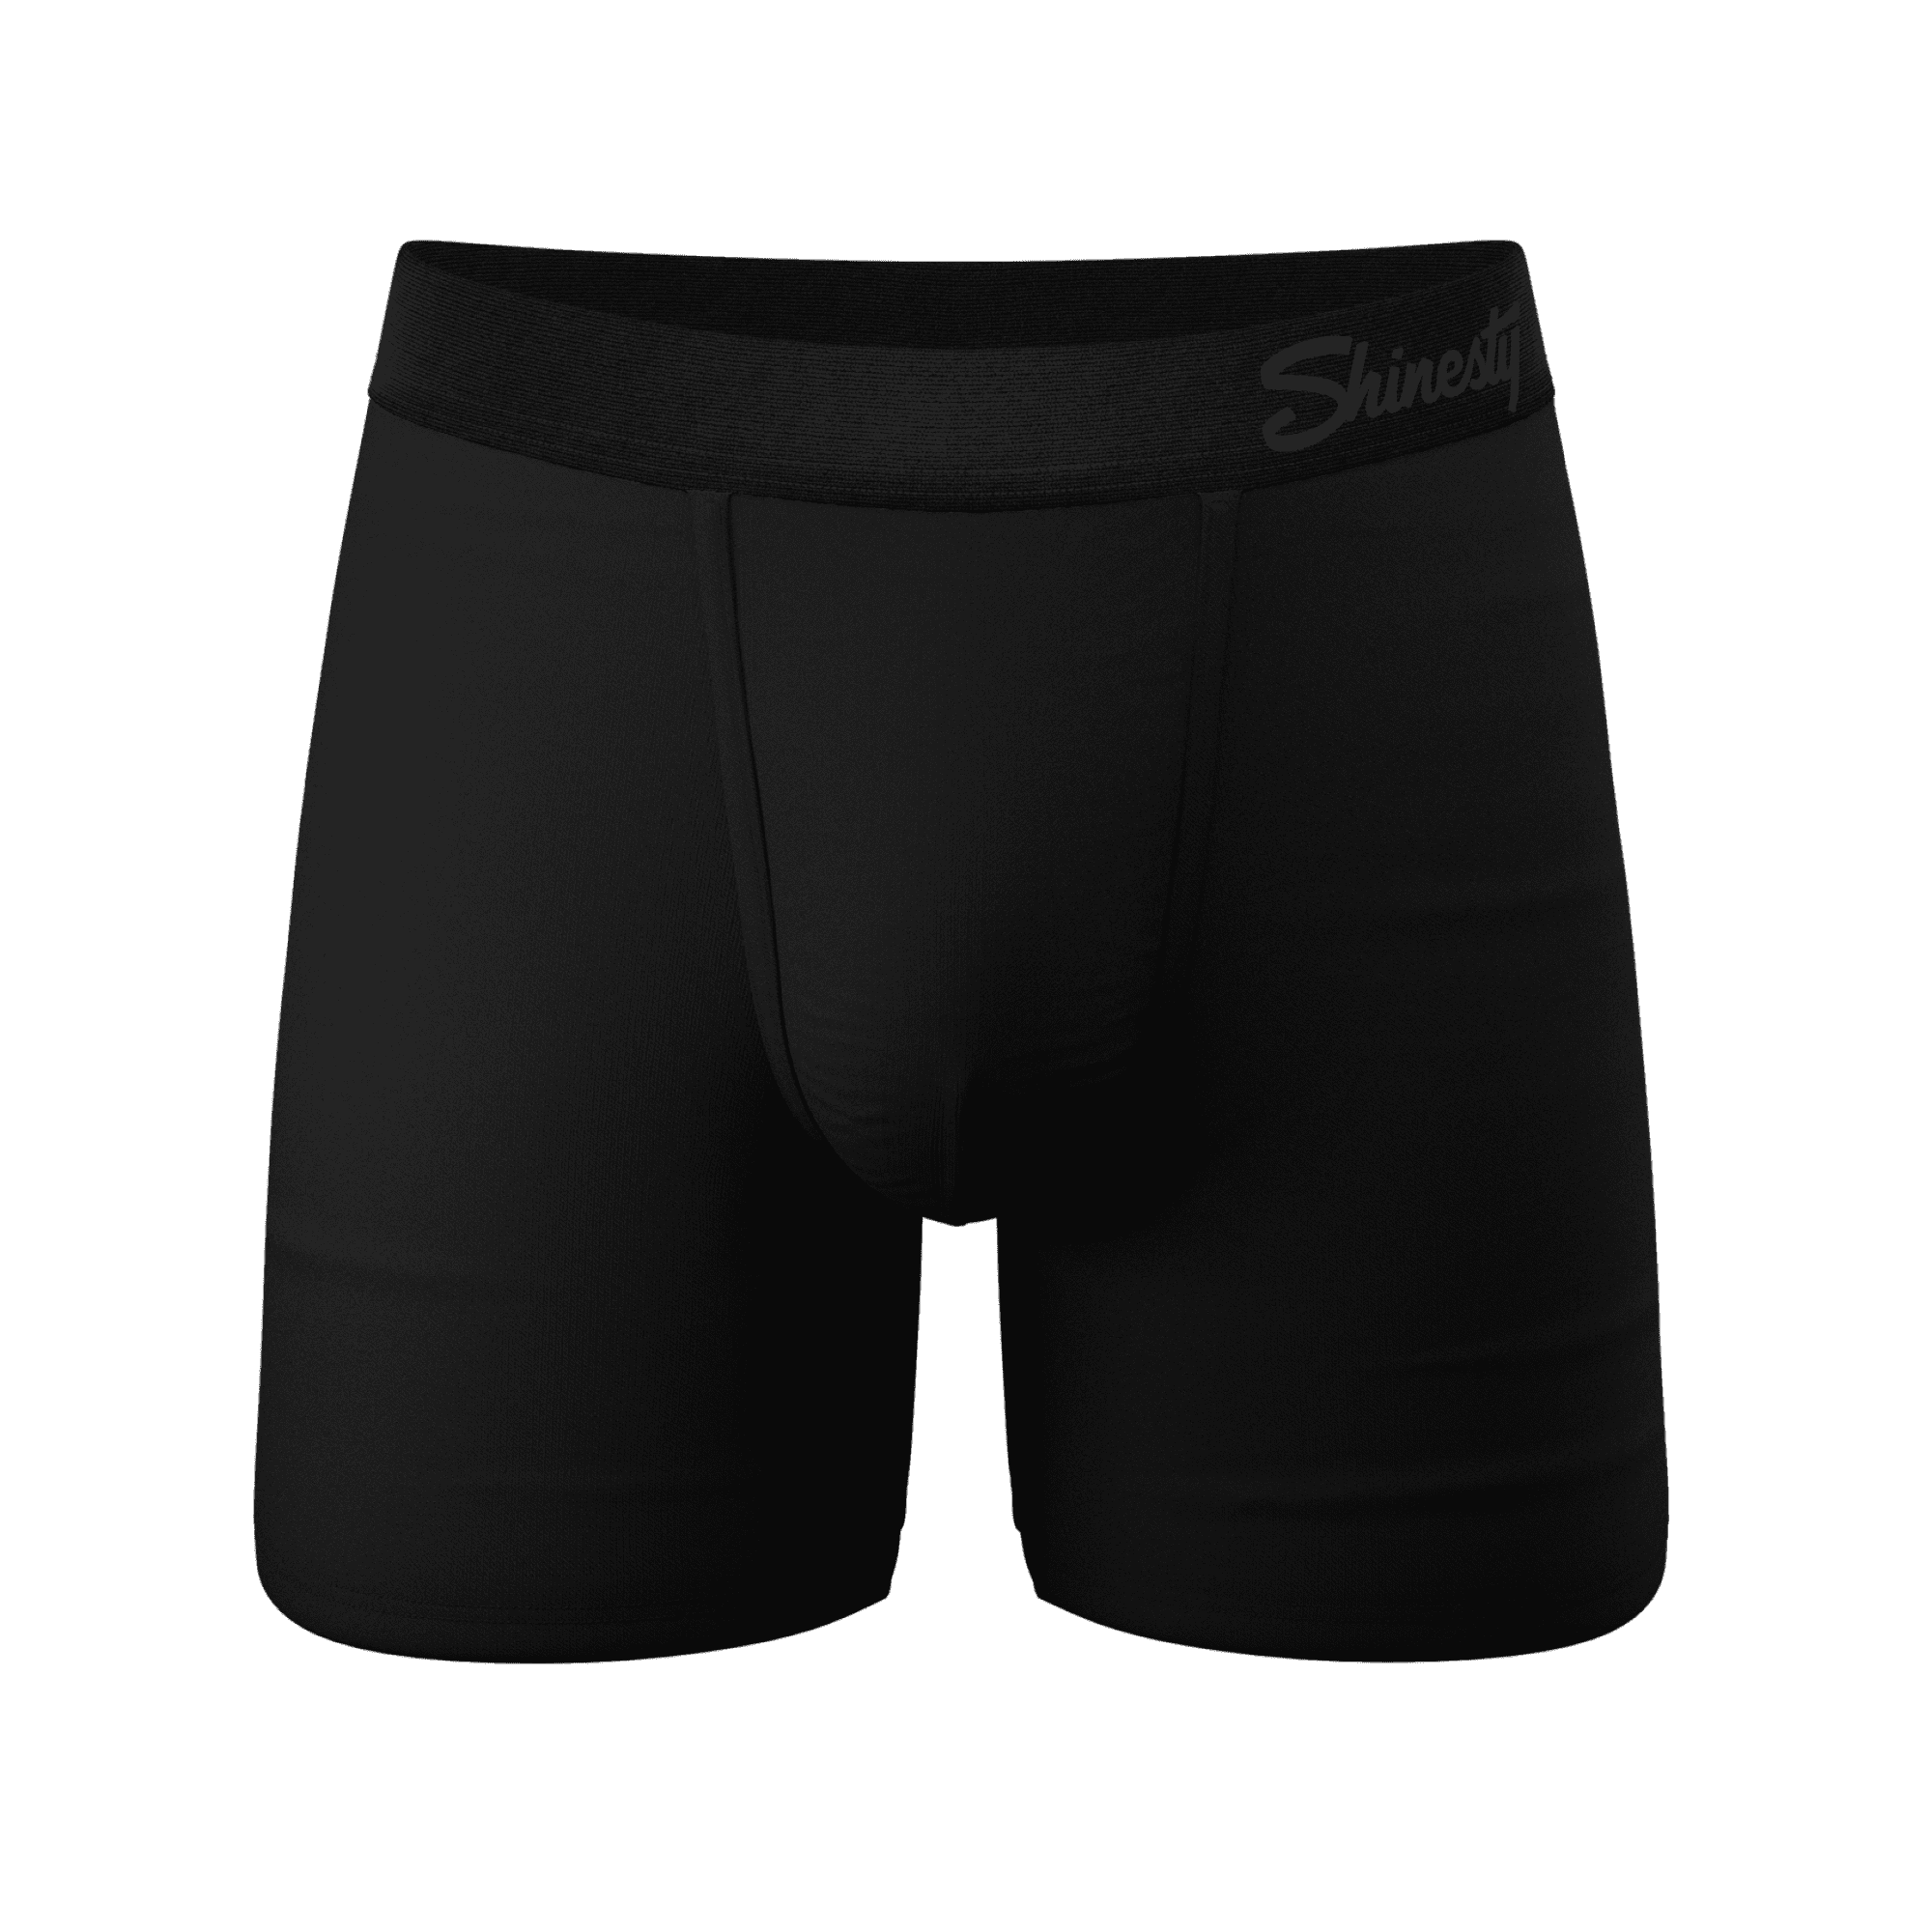 The Afternoon Arcade  Retro Geometric Ball Hammock® Pouch Underwear -  ShopperBoard